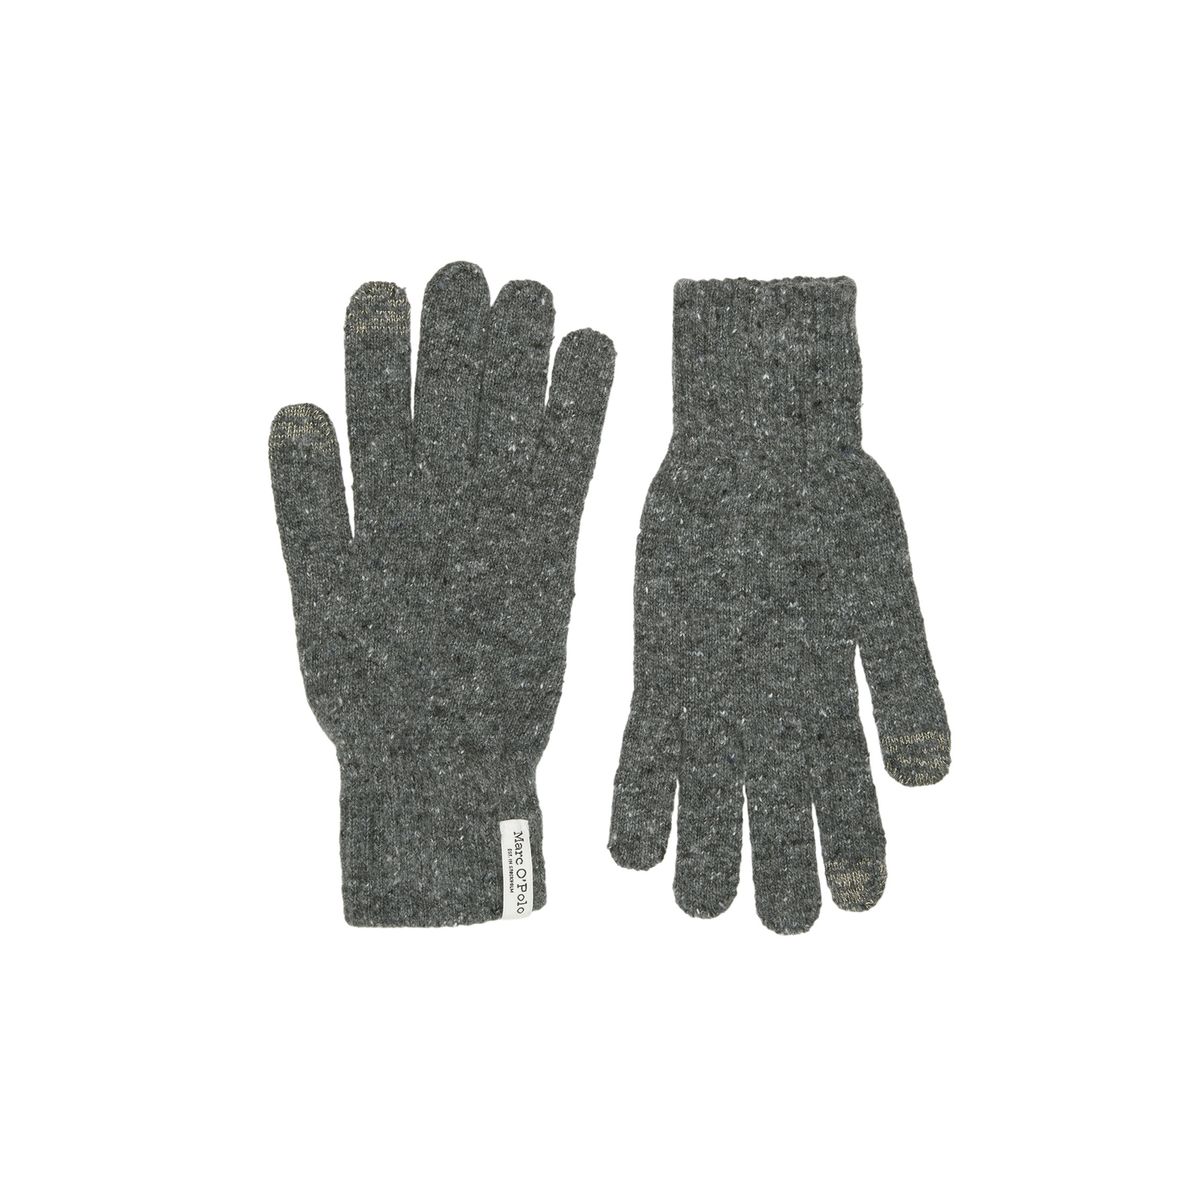 Gants tactiles en polaire recyclée - doublure flexible noir Isotoner